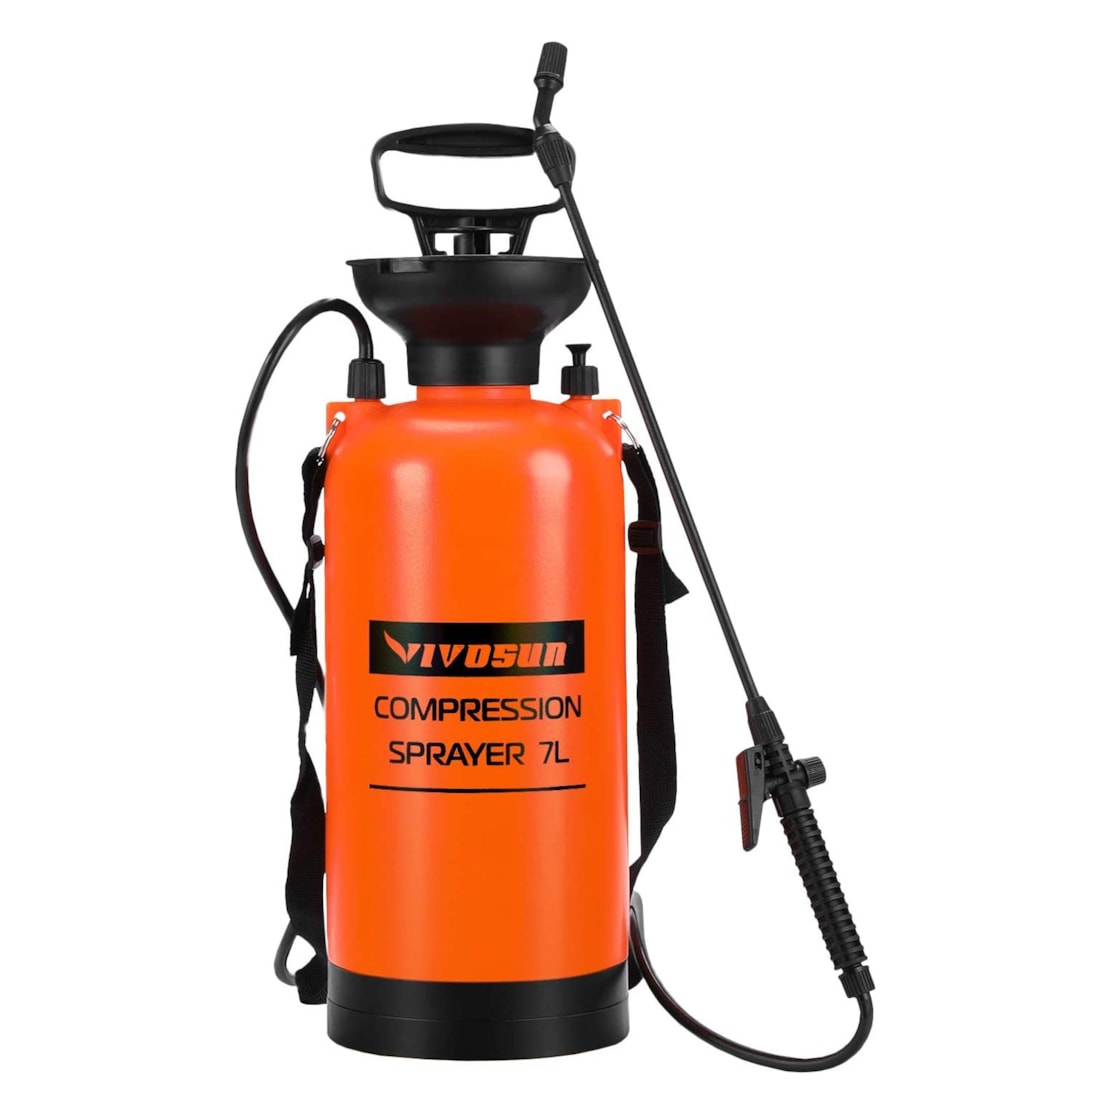 VIVOSUN 1.85 Gallon Pump Pressure Sprayer